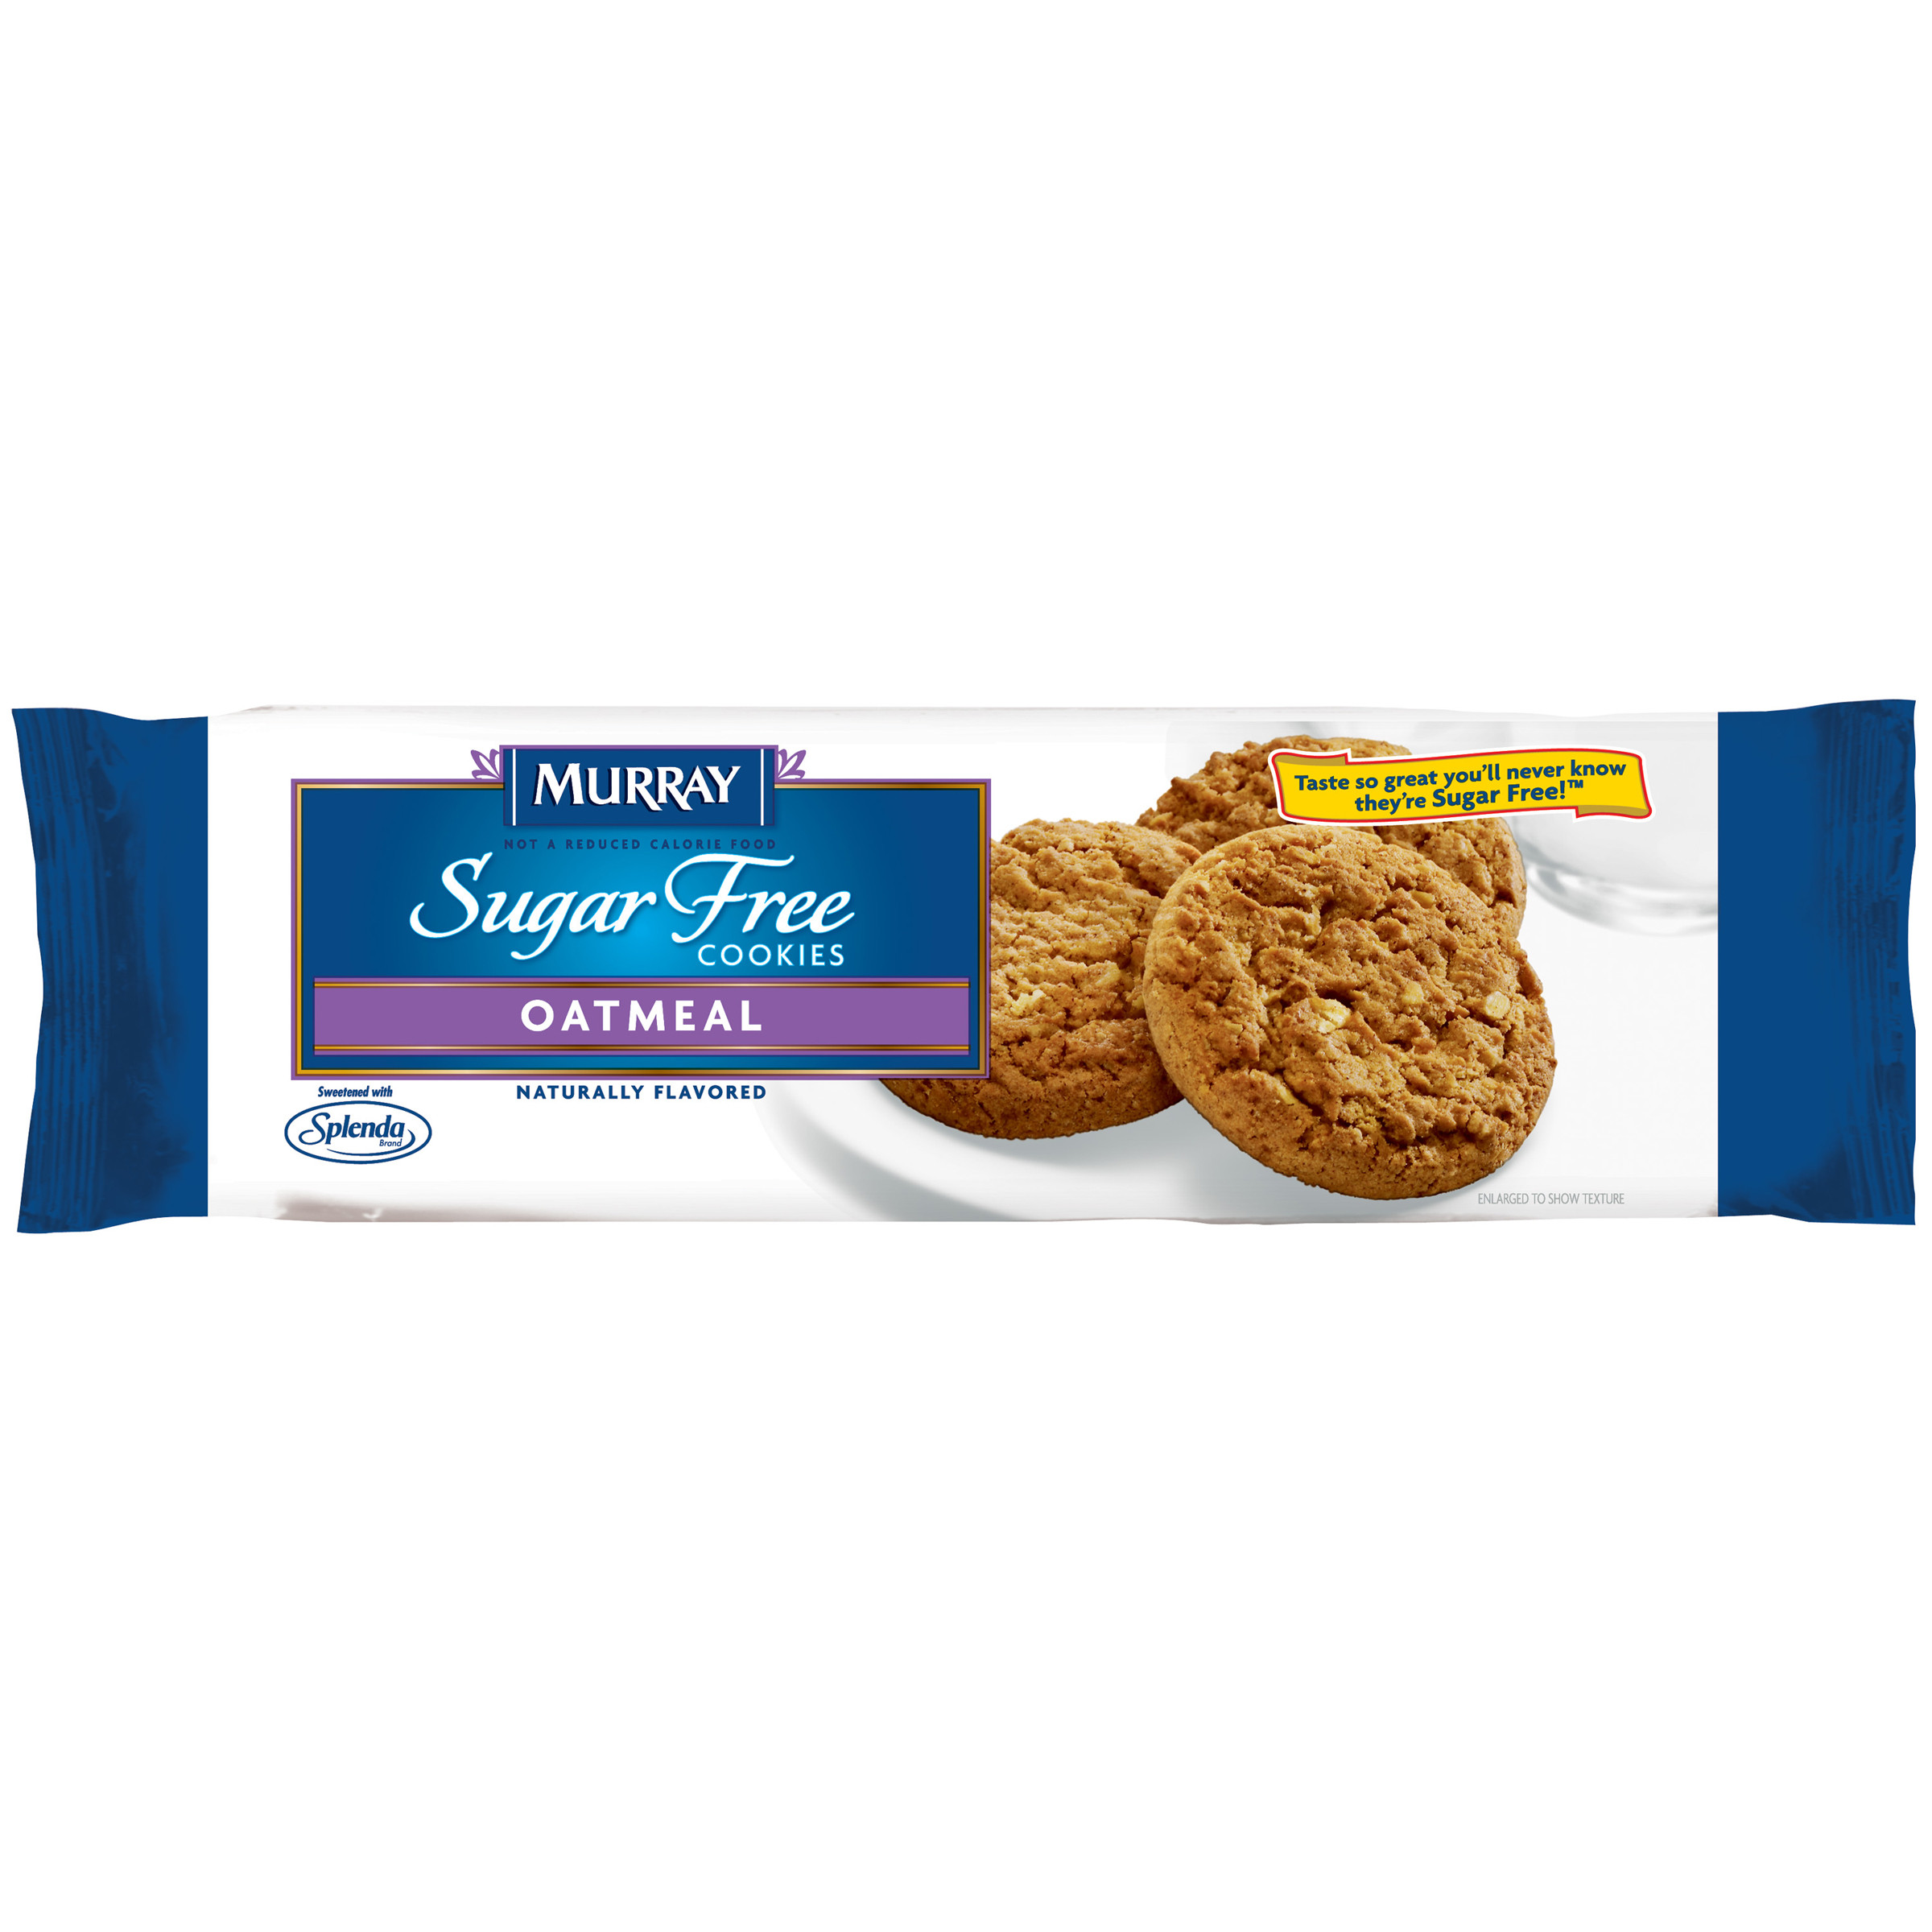 Murray Sugar Free Cookies
 MURRAY SUGAR FREE Oatmeal Cookies 5 5 OZ TRAY Food